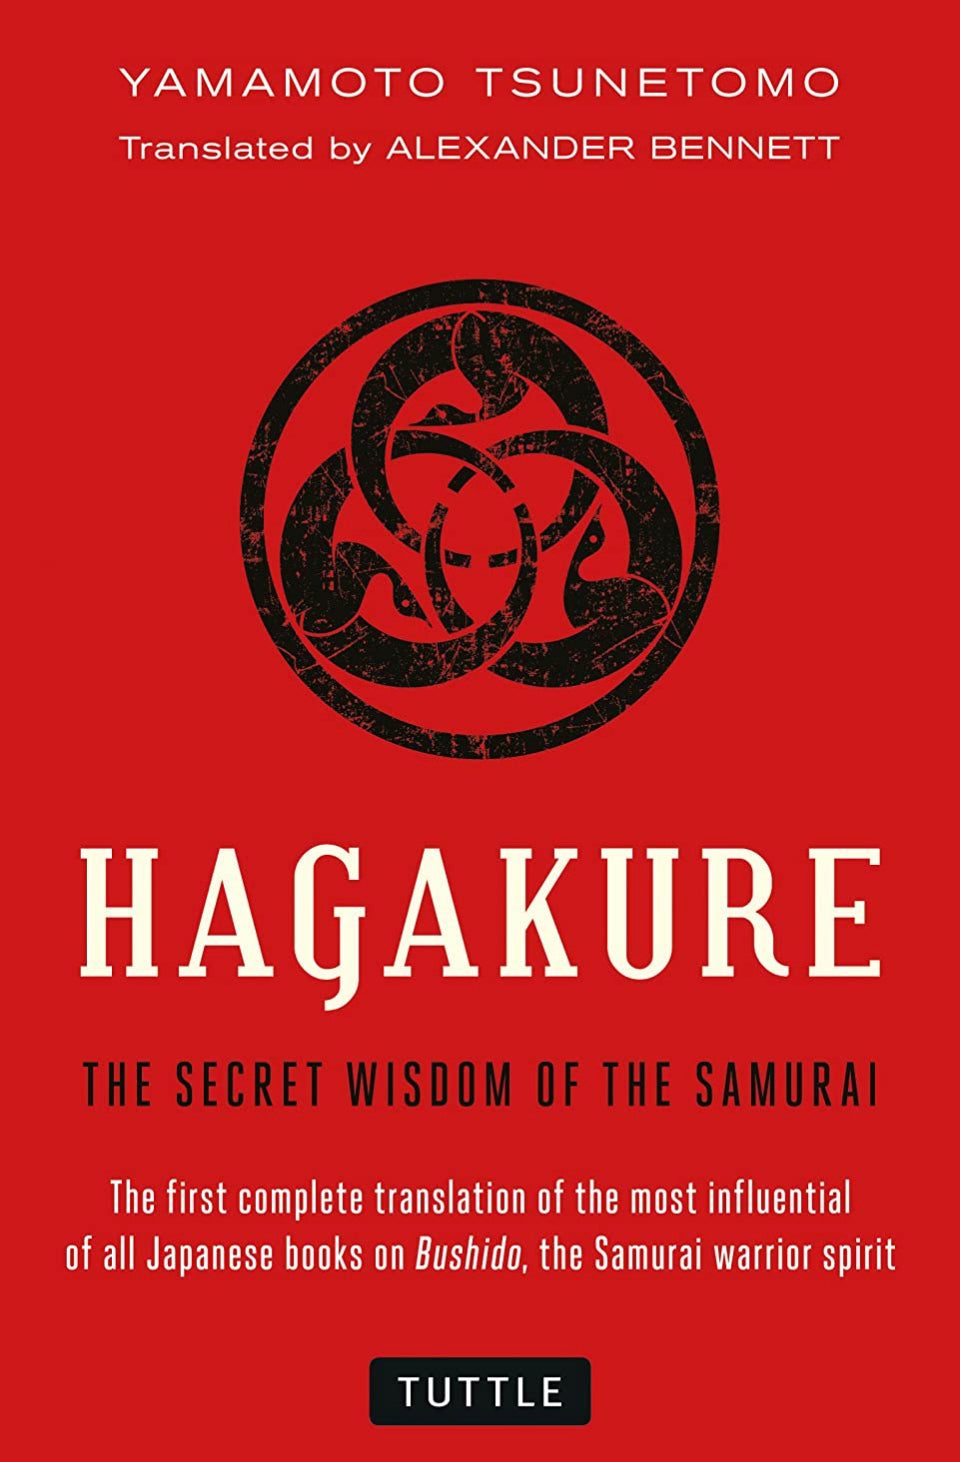 Hagakure Libro del Samurai de Yamamoto Tsunetomo